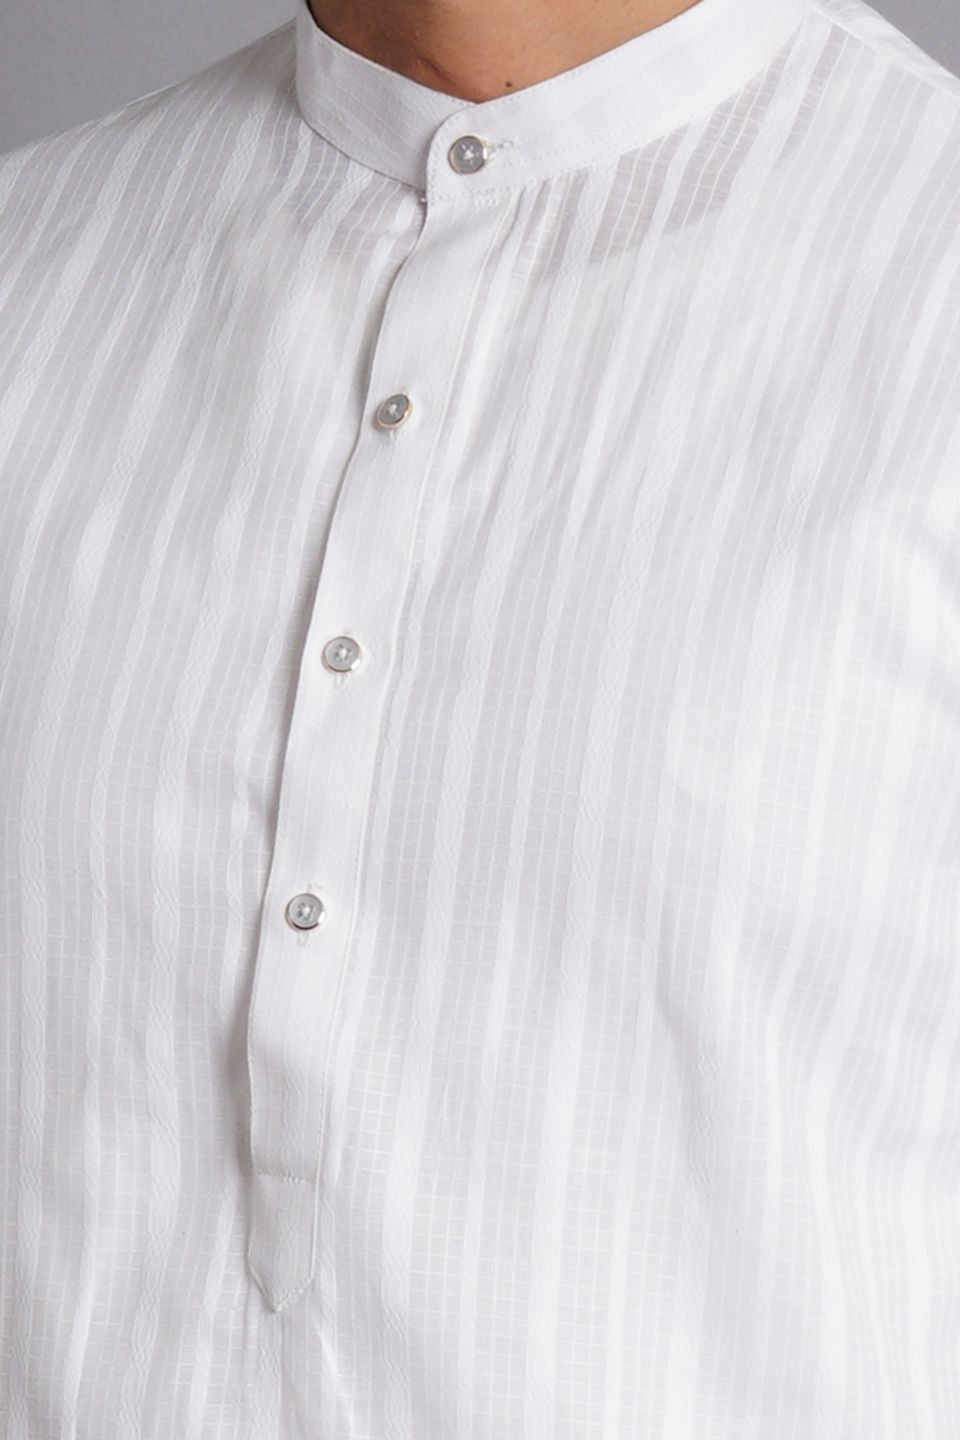 Cotton White Striped Long Kurta Pajama